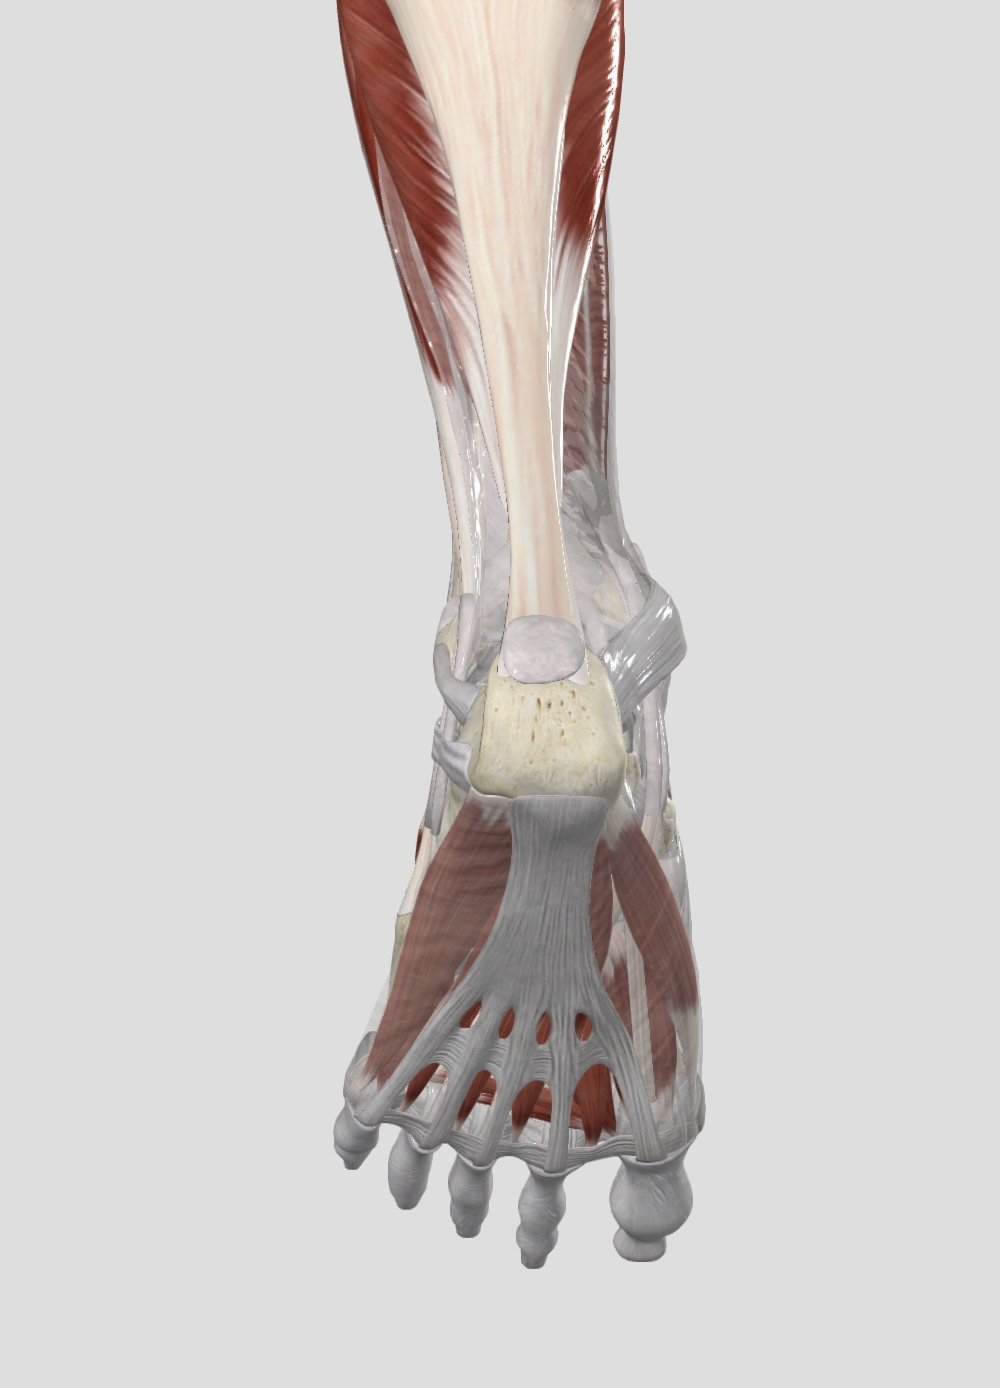 Muscles &amp; tendons of the heel